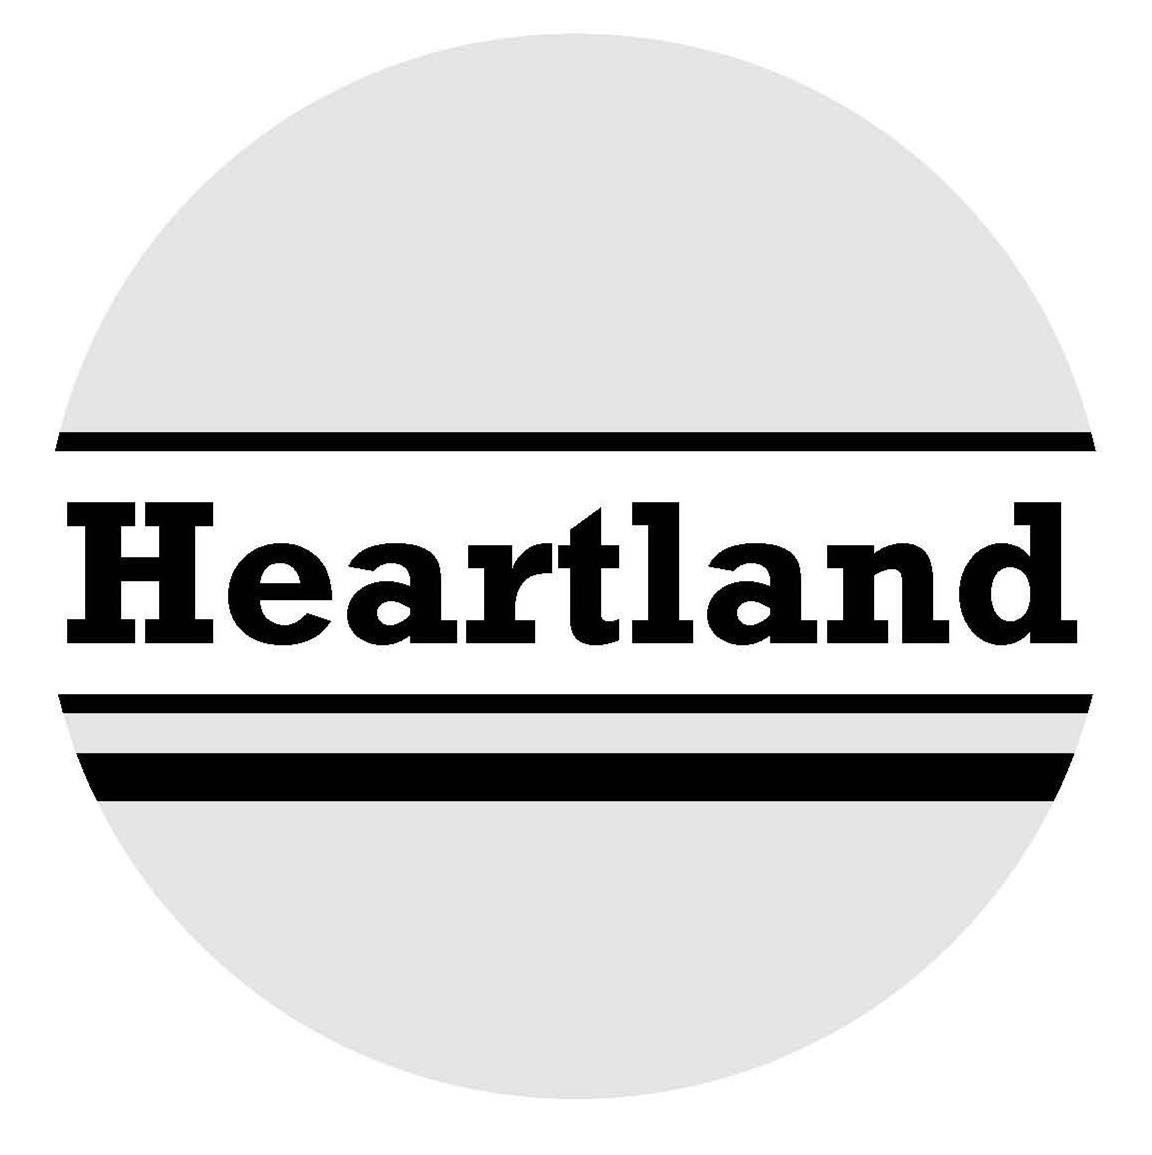 HEARTLAND Lifetime Brands, Inc. Trademark Registration